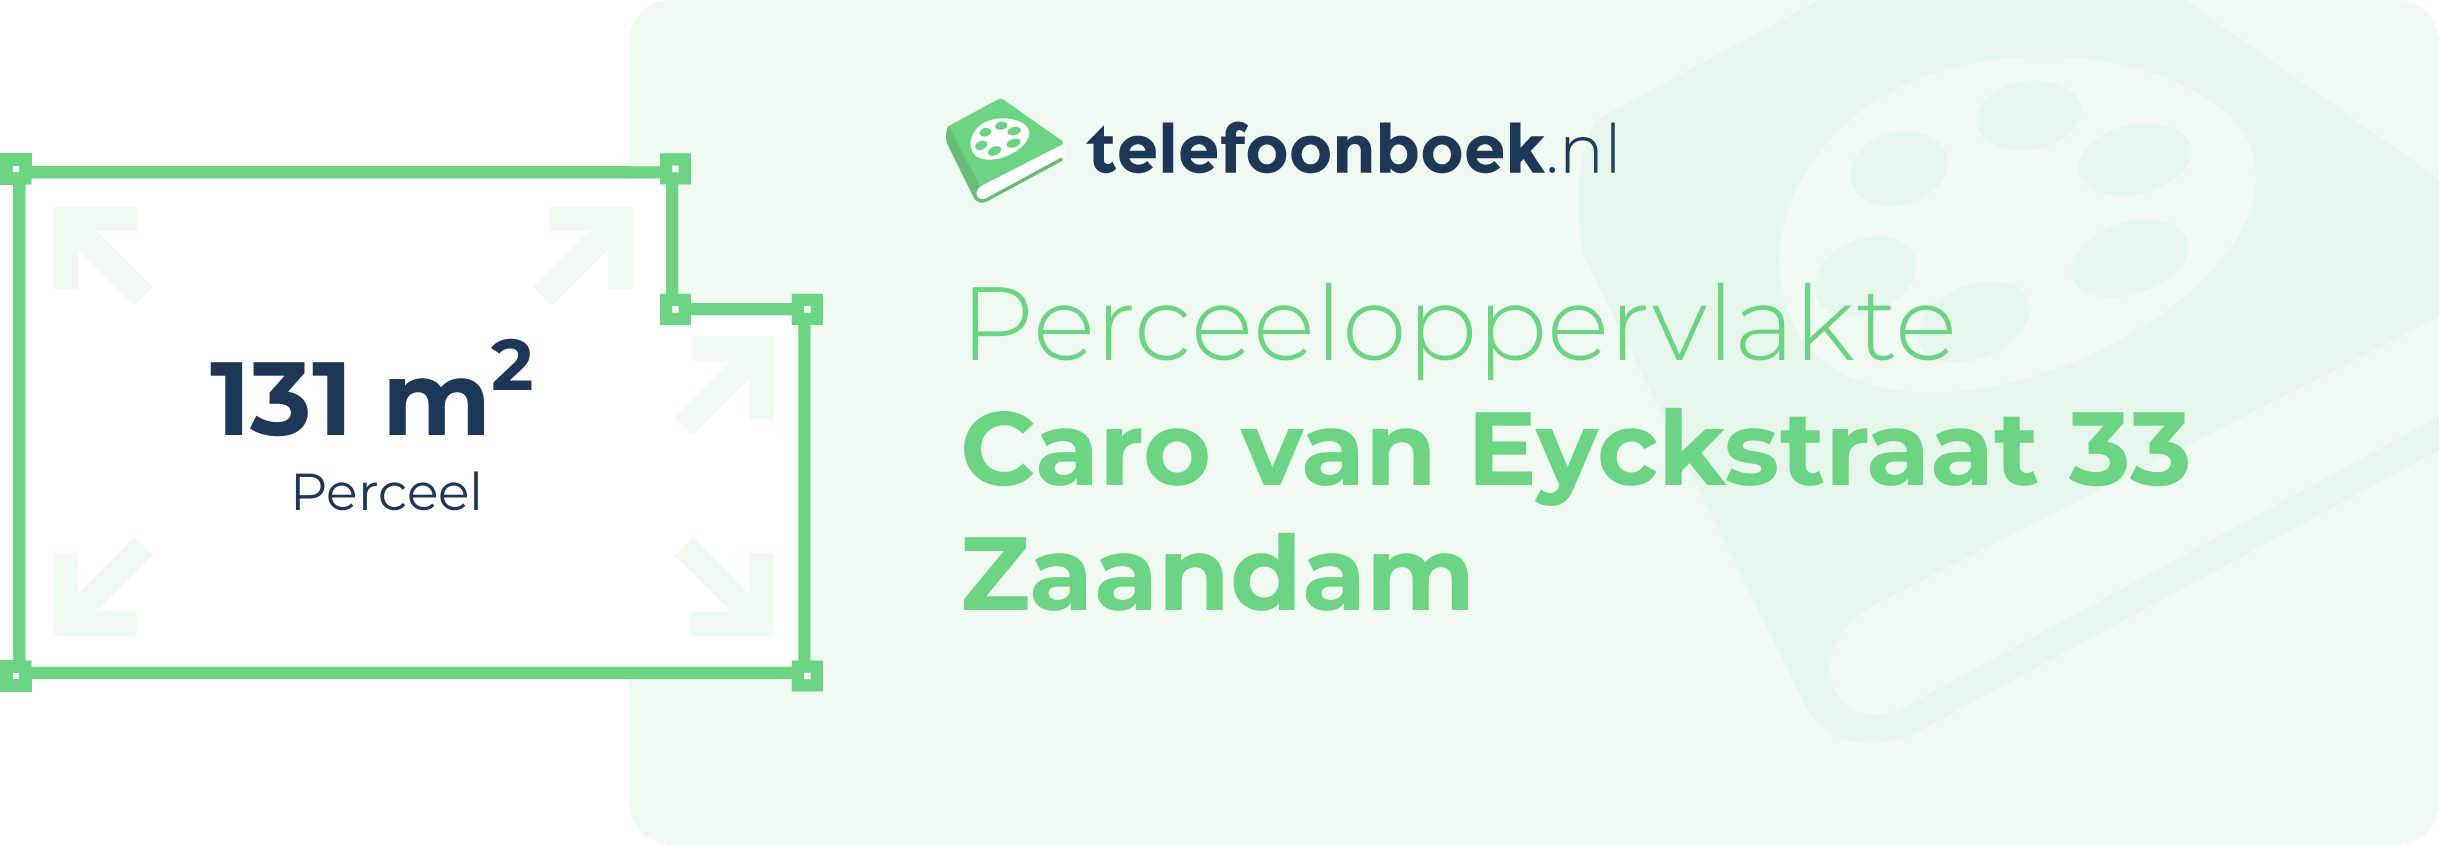 Perceeloppervlakte Caro Van Eyckstraat 33 Zaandam